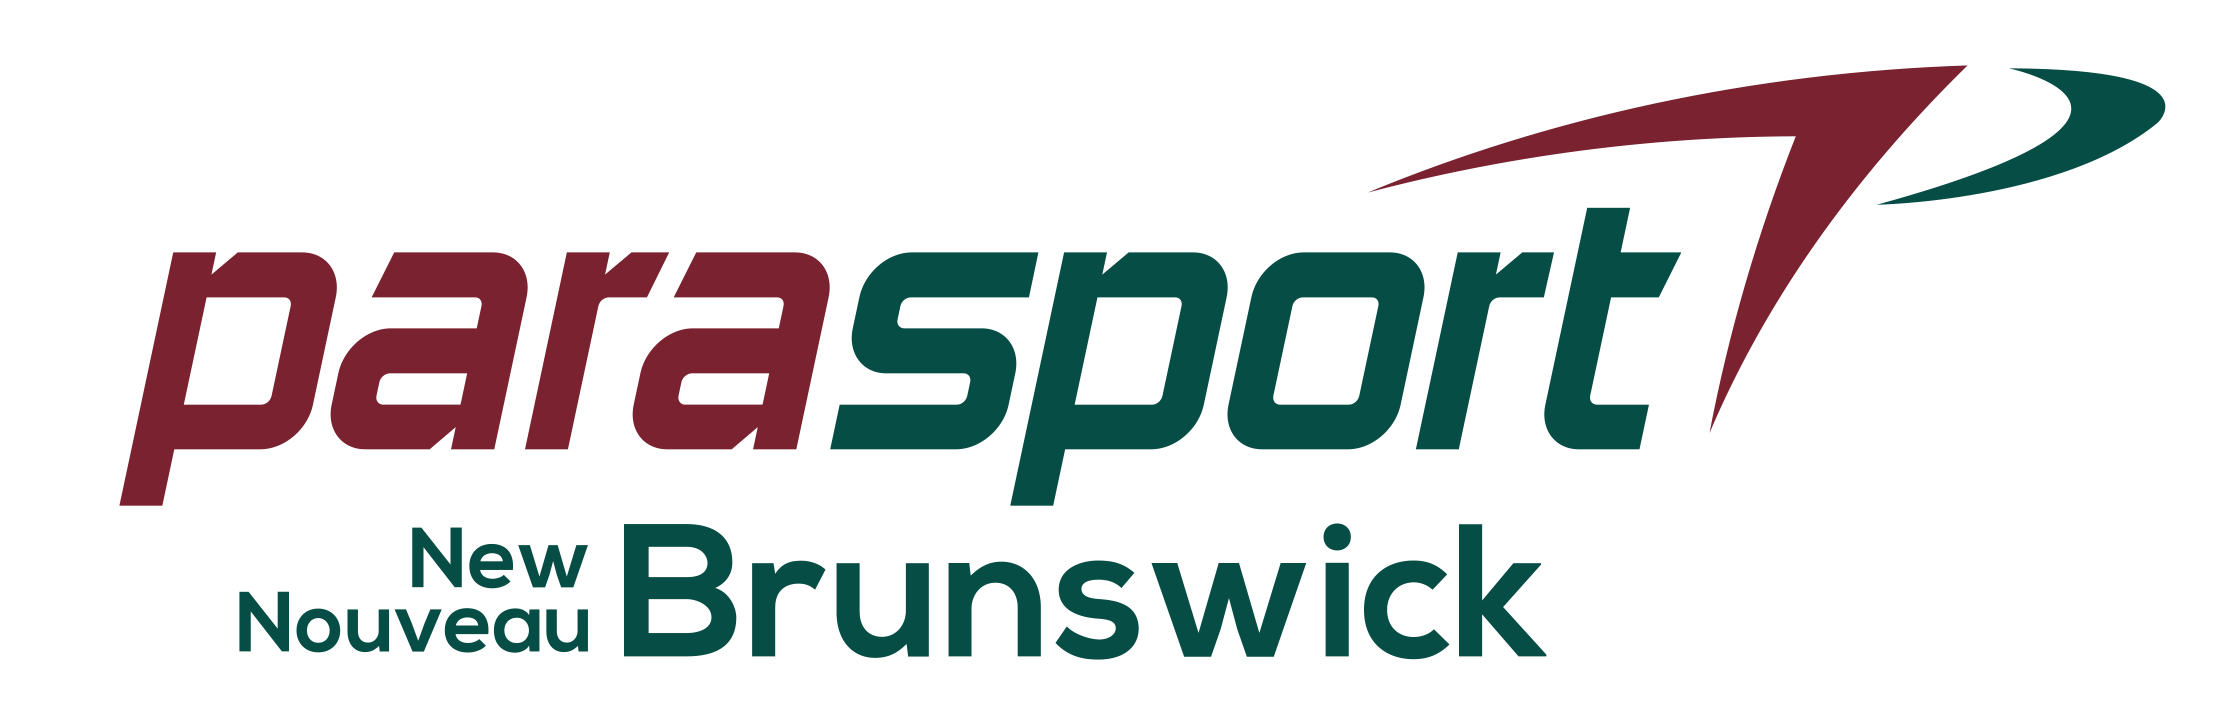 Parasport New Brunswick logo